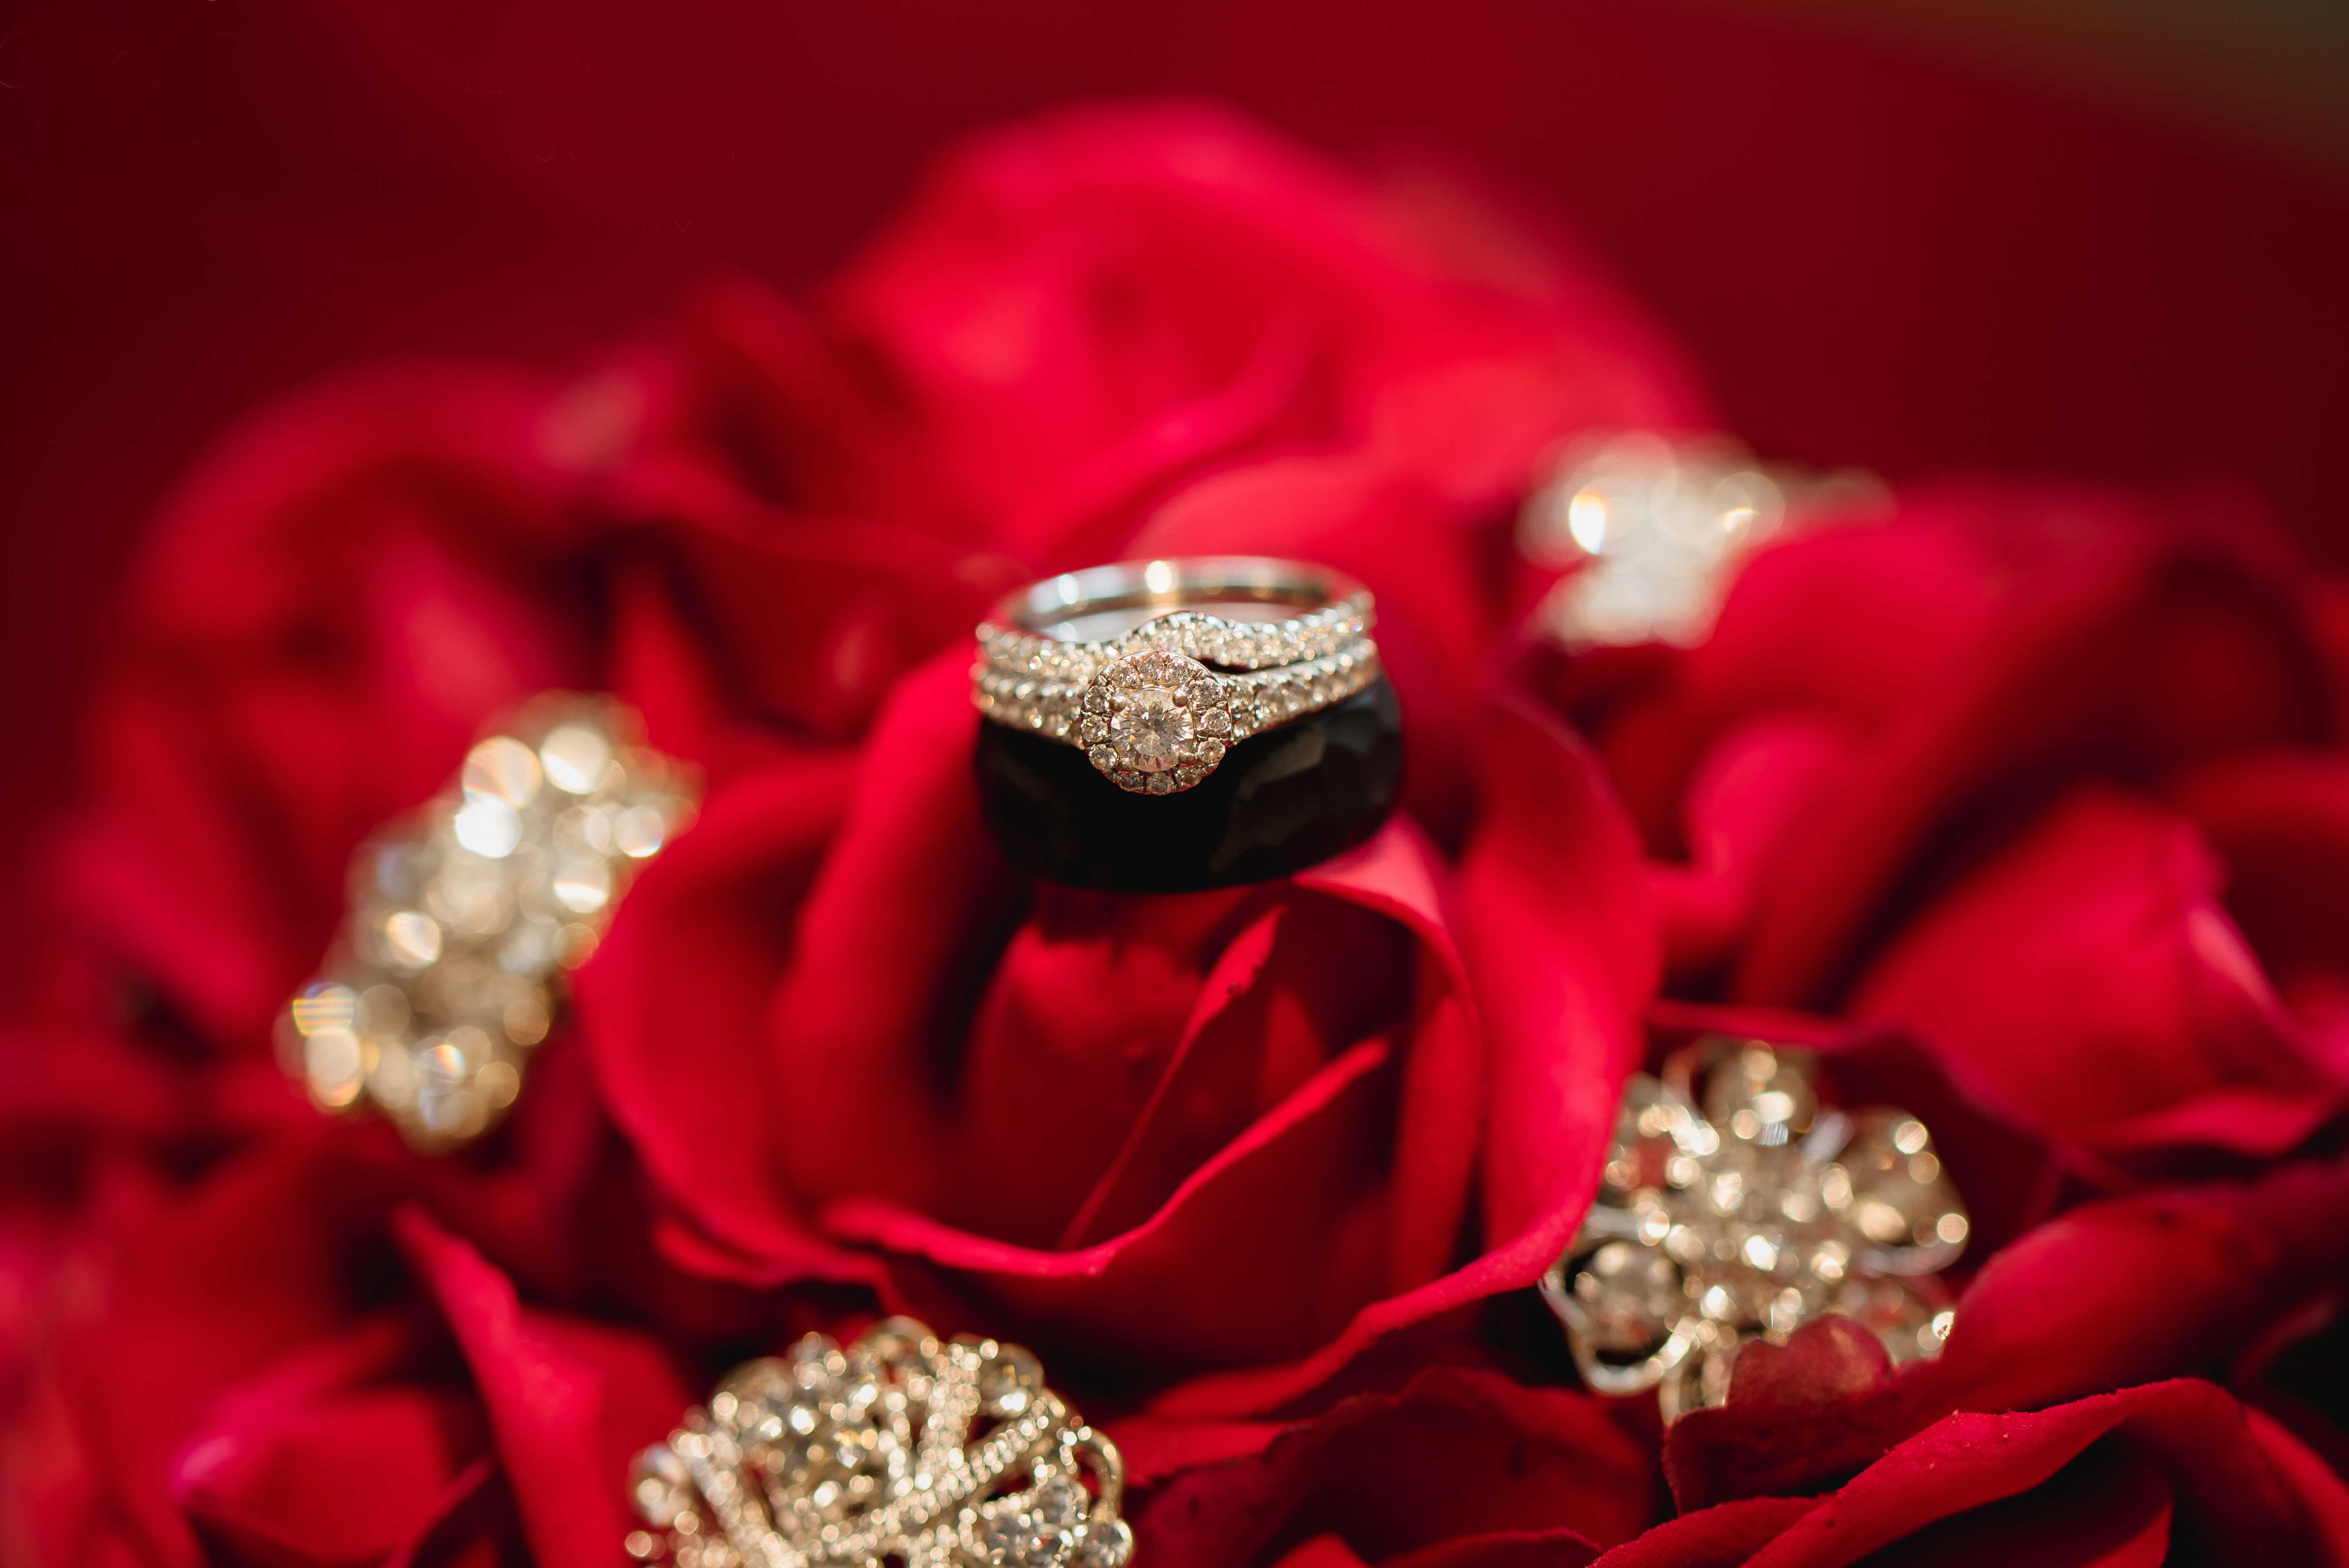 Fuller Wedding 1057 - Portfolio: Engagements / Weddings